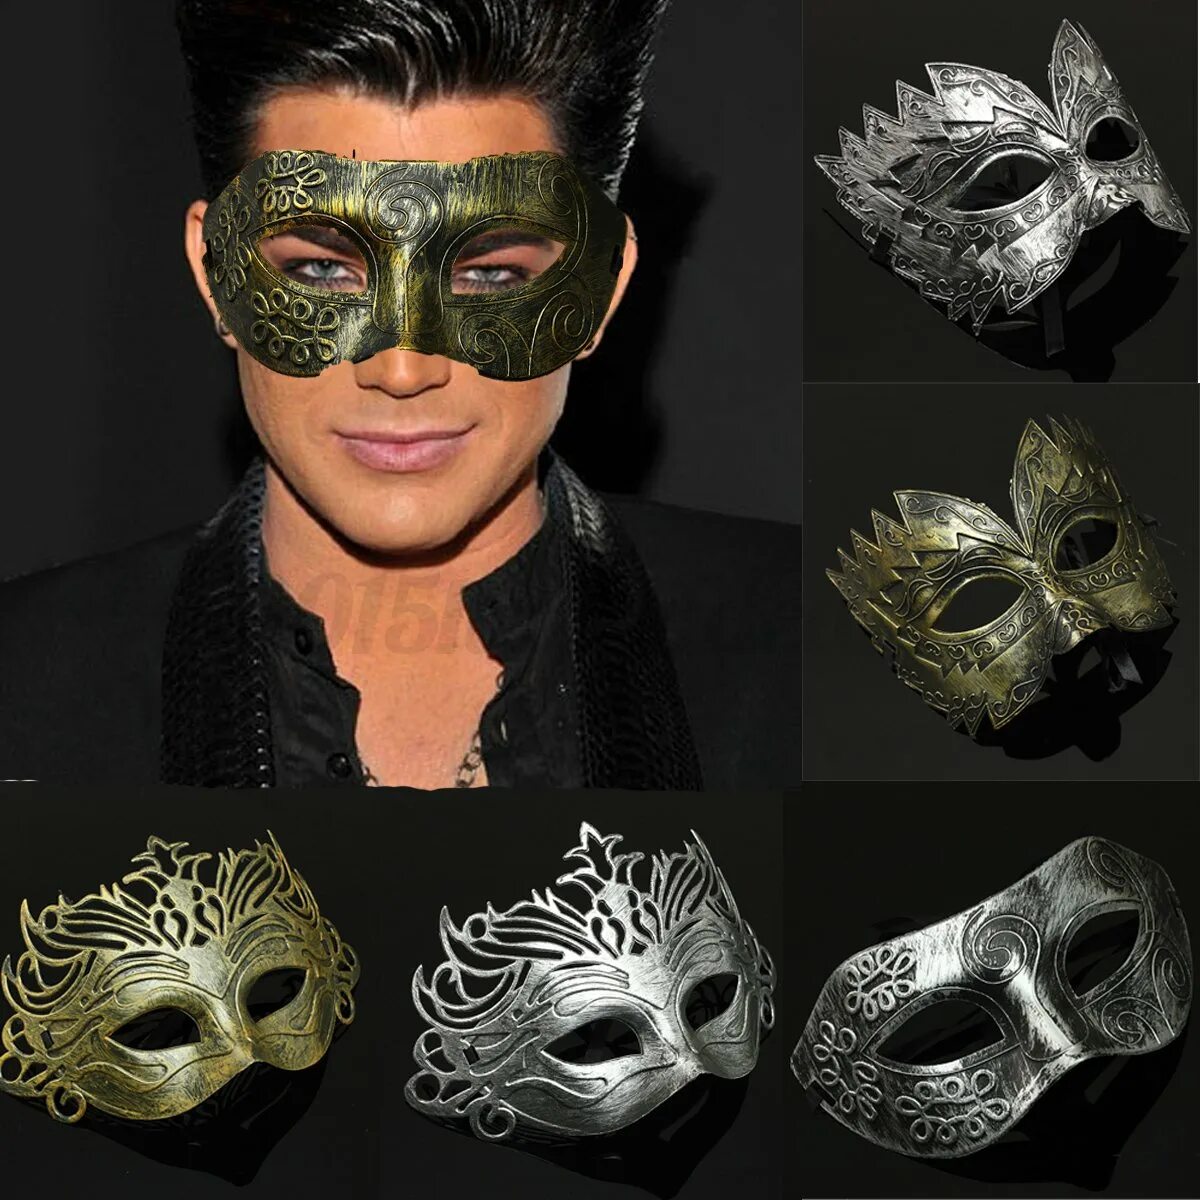 Маскарадная маска мужская. Мужчина в маскарадной маске. Мужская маска для маскарада. Карнавальная маска «мужчина». 10 новых масок